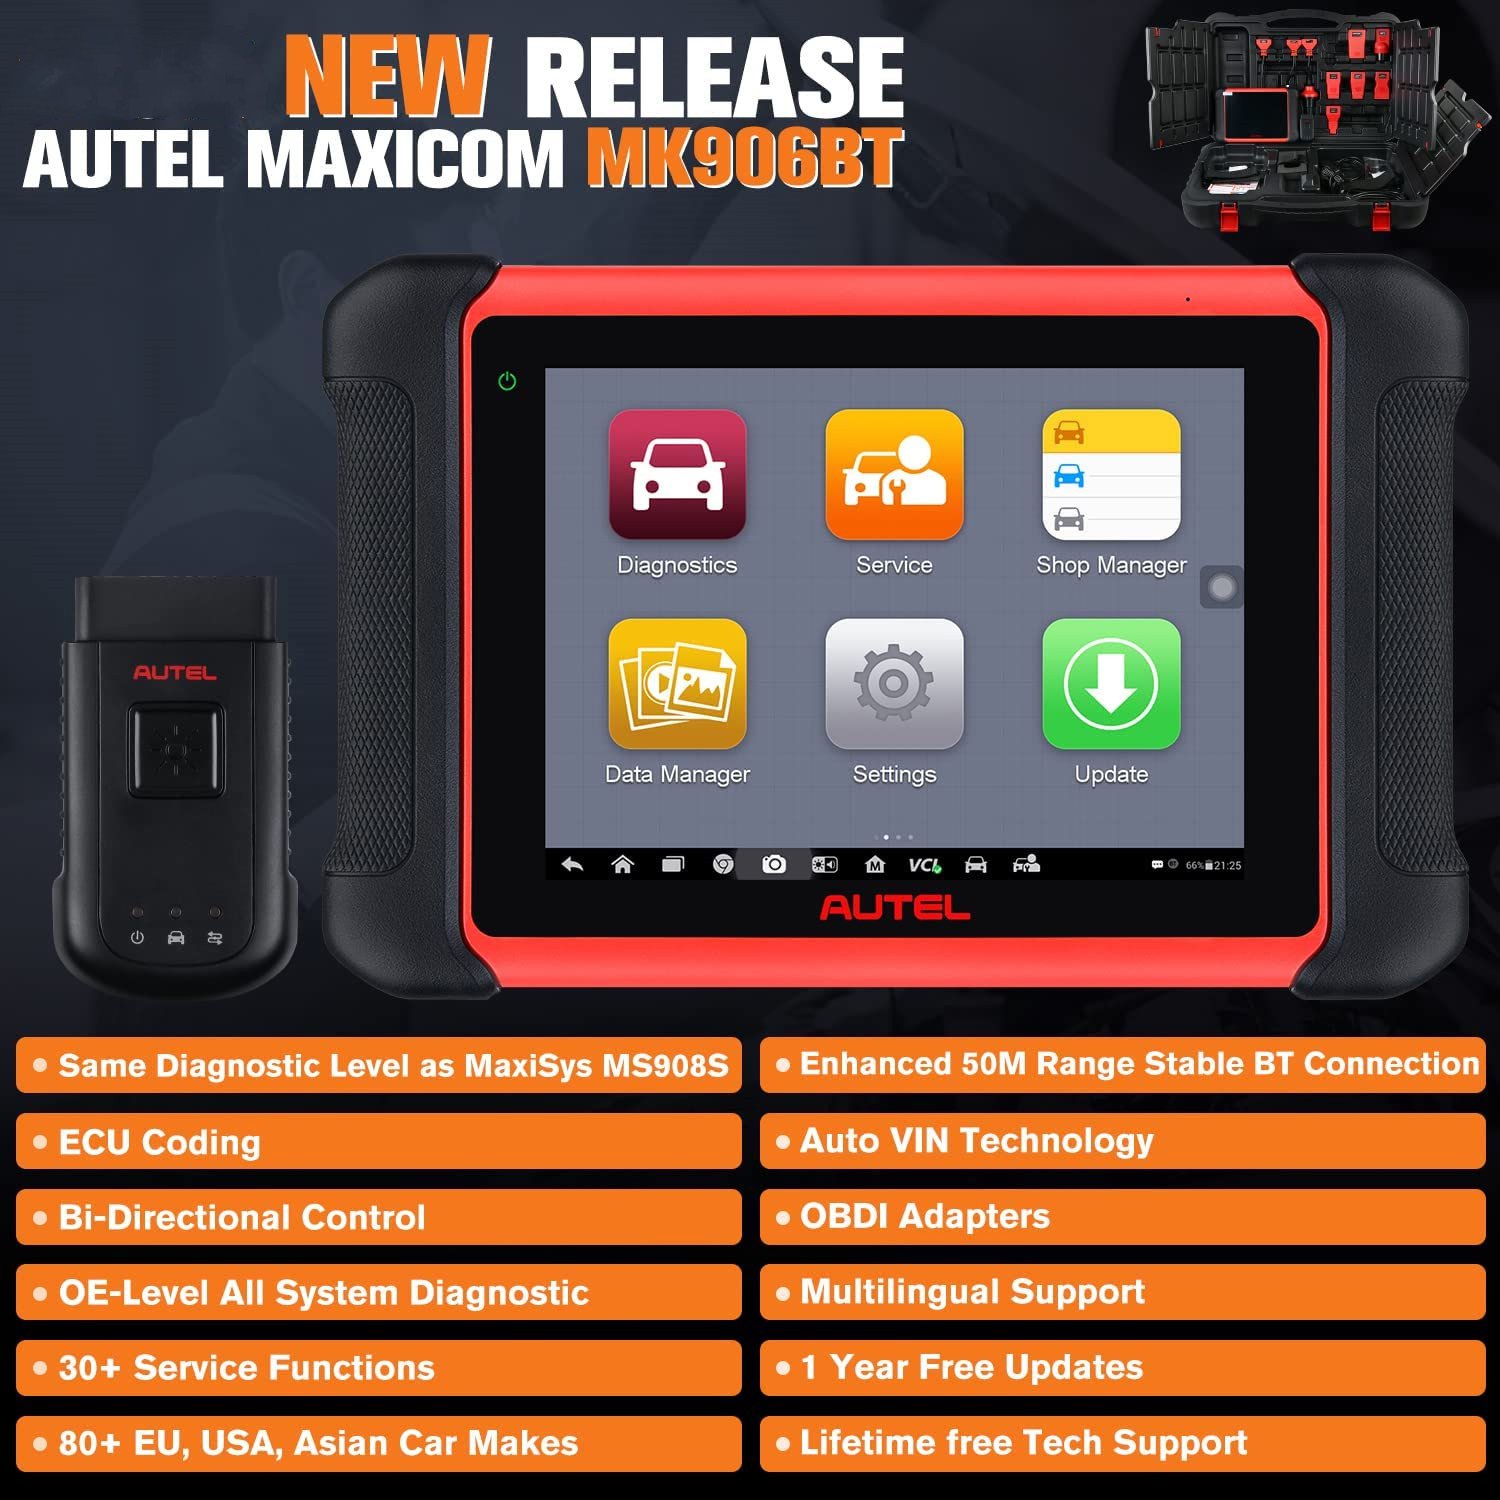 Autel MaxiCOM MK906BT new release